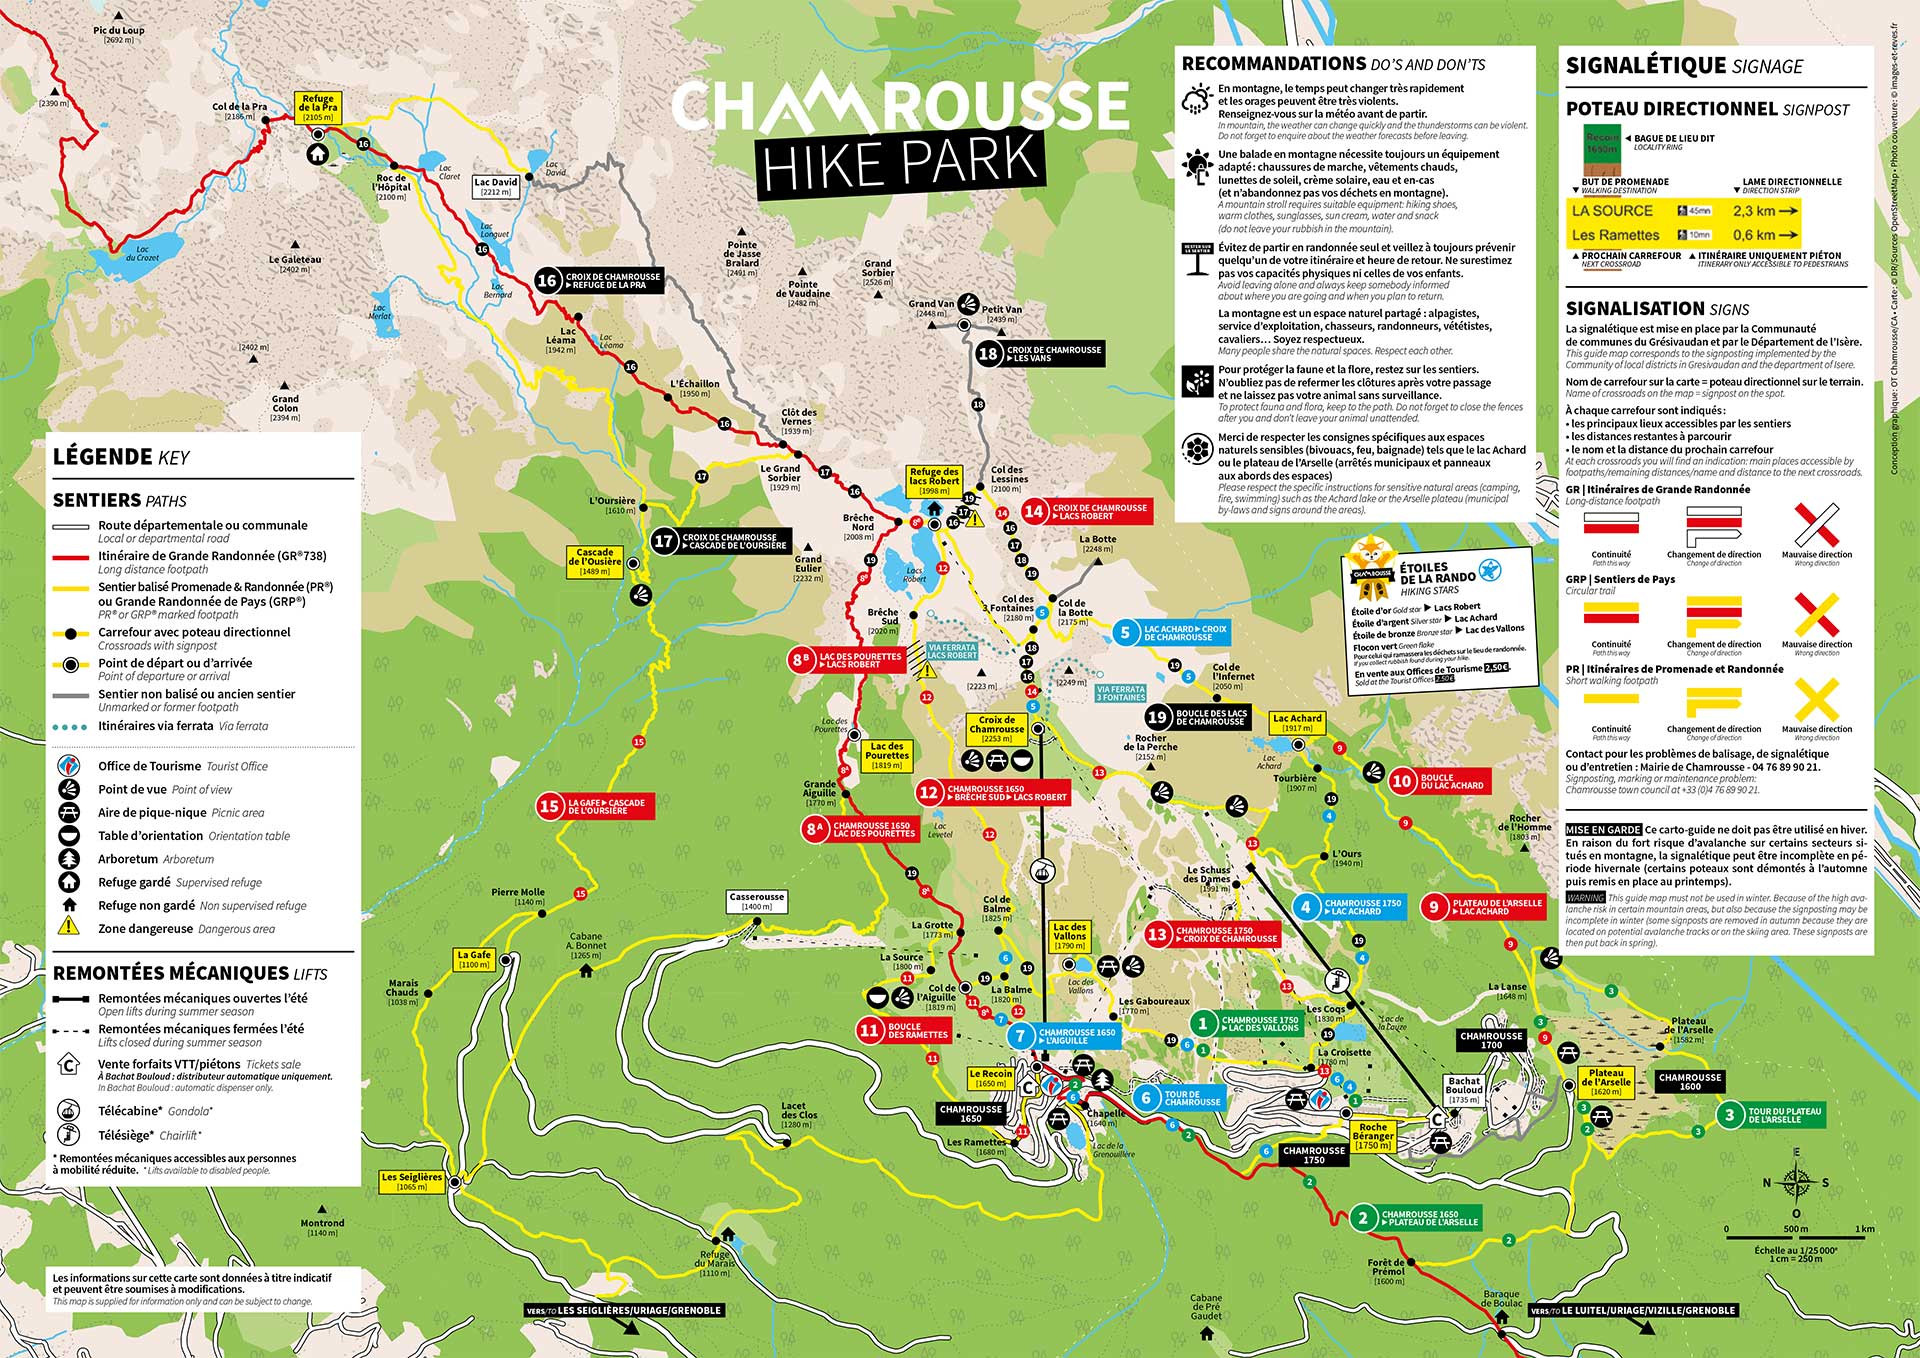 Chamrousse hiking plan hike summer 2022 mountain resort grenoble isere french alps france